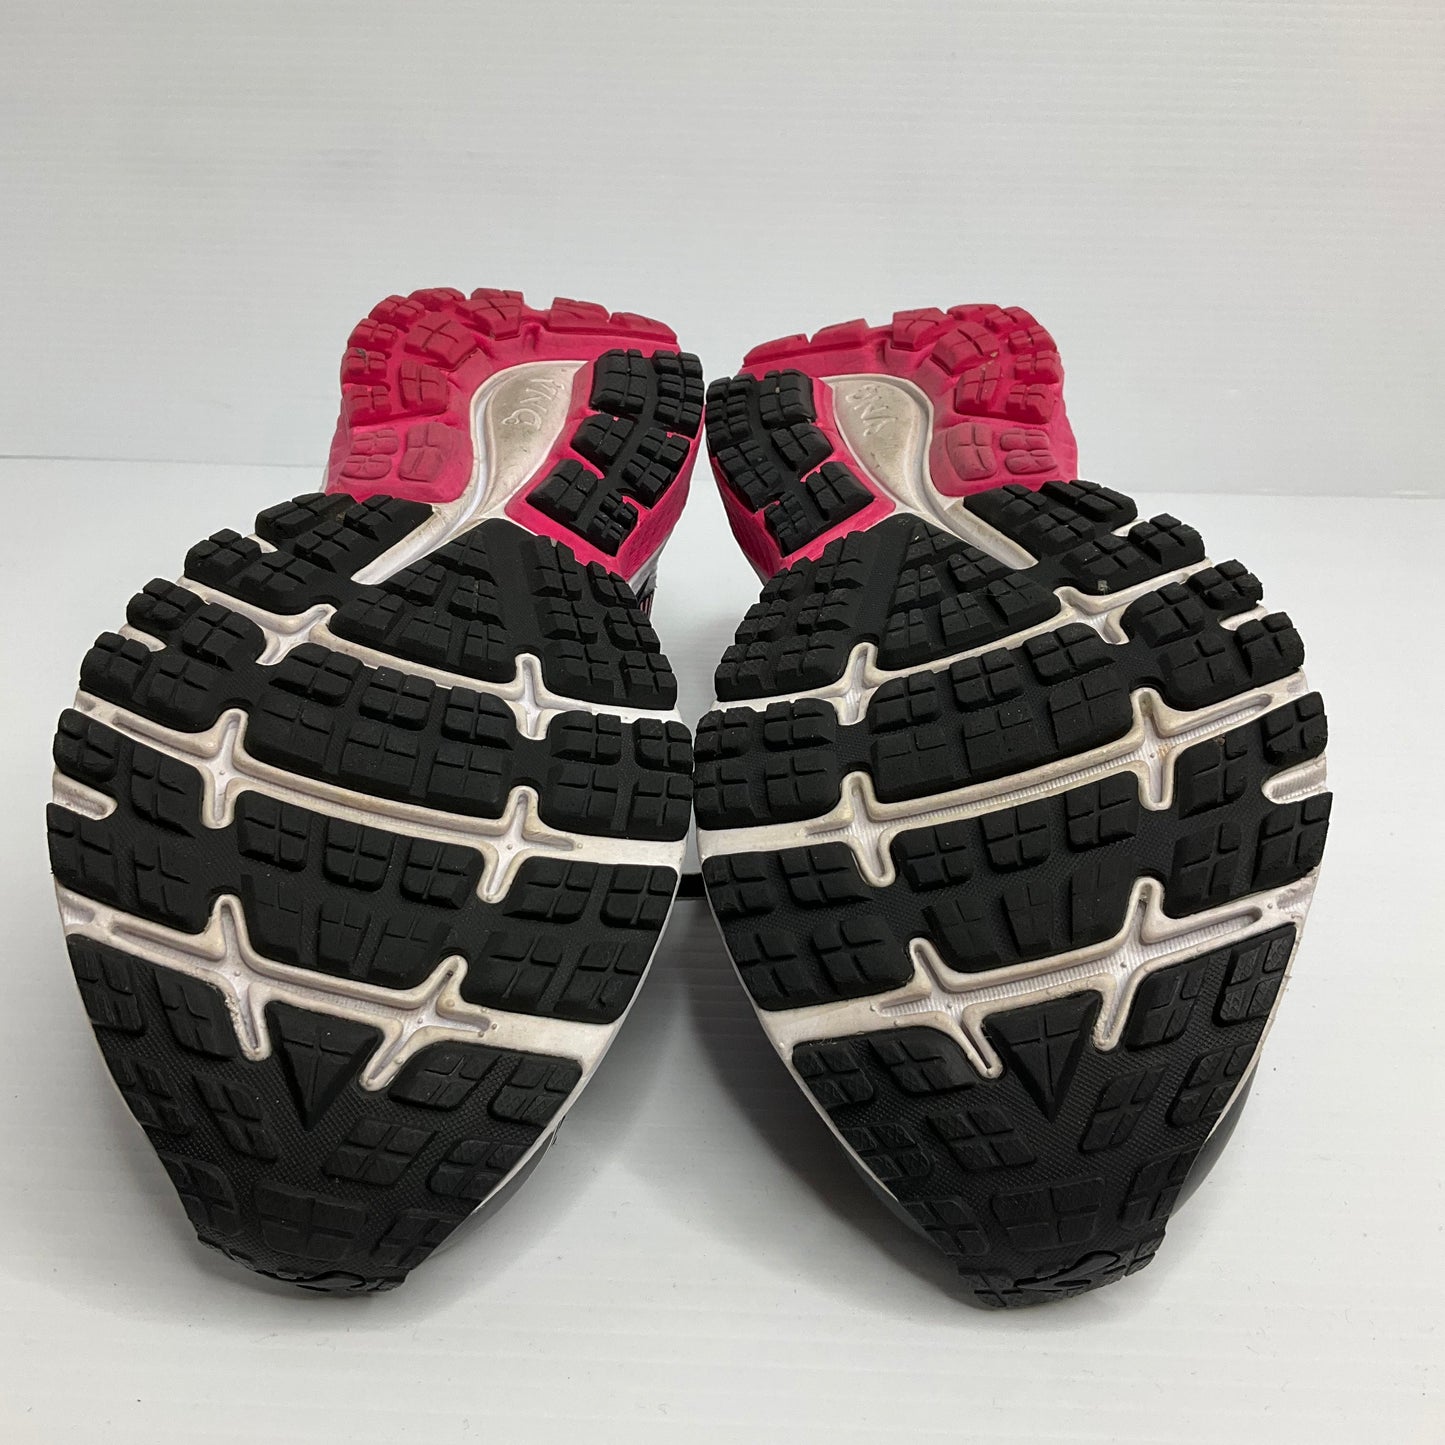 Black & Pink Shoes Athletic Brooks, Size 8.5